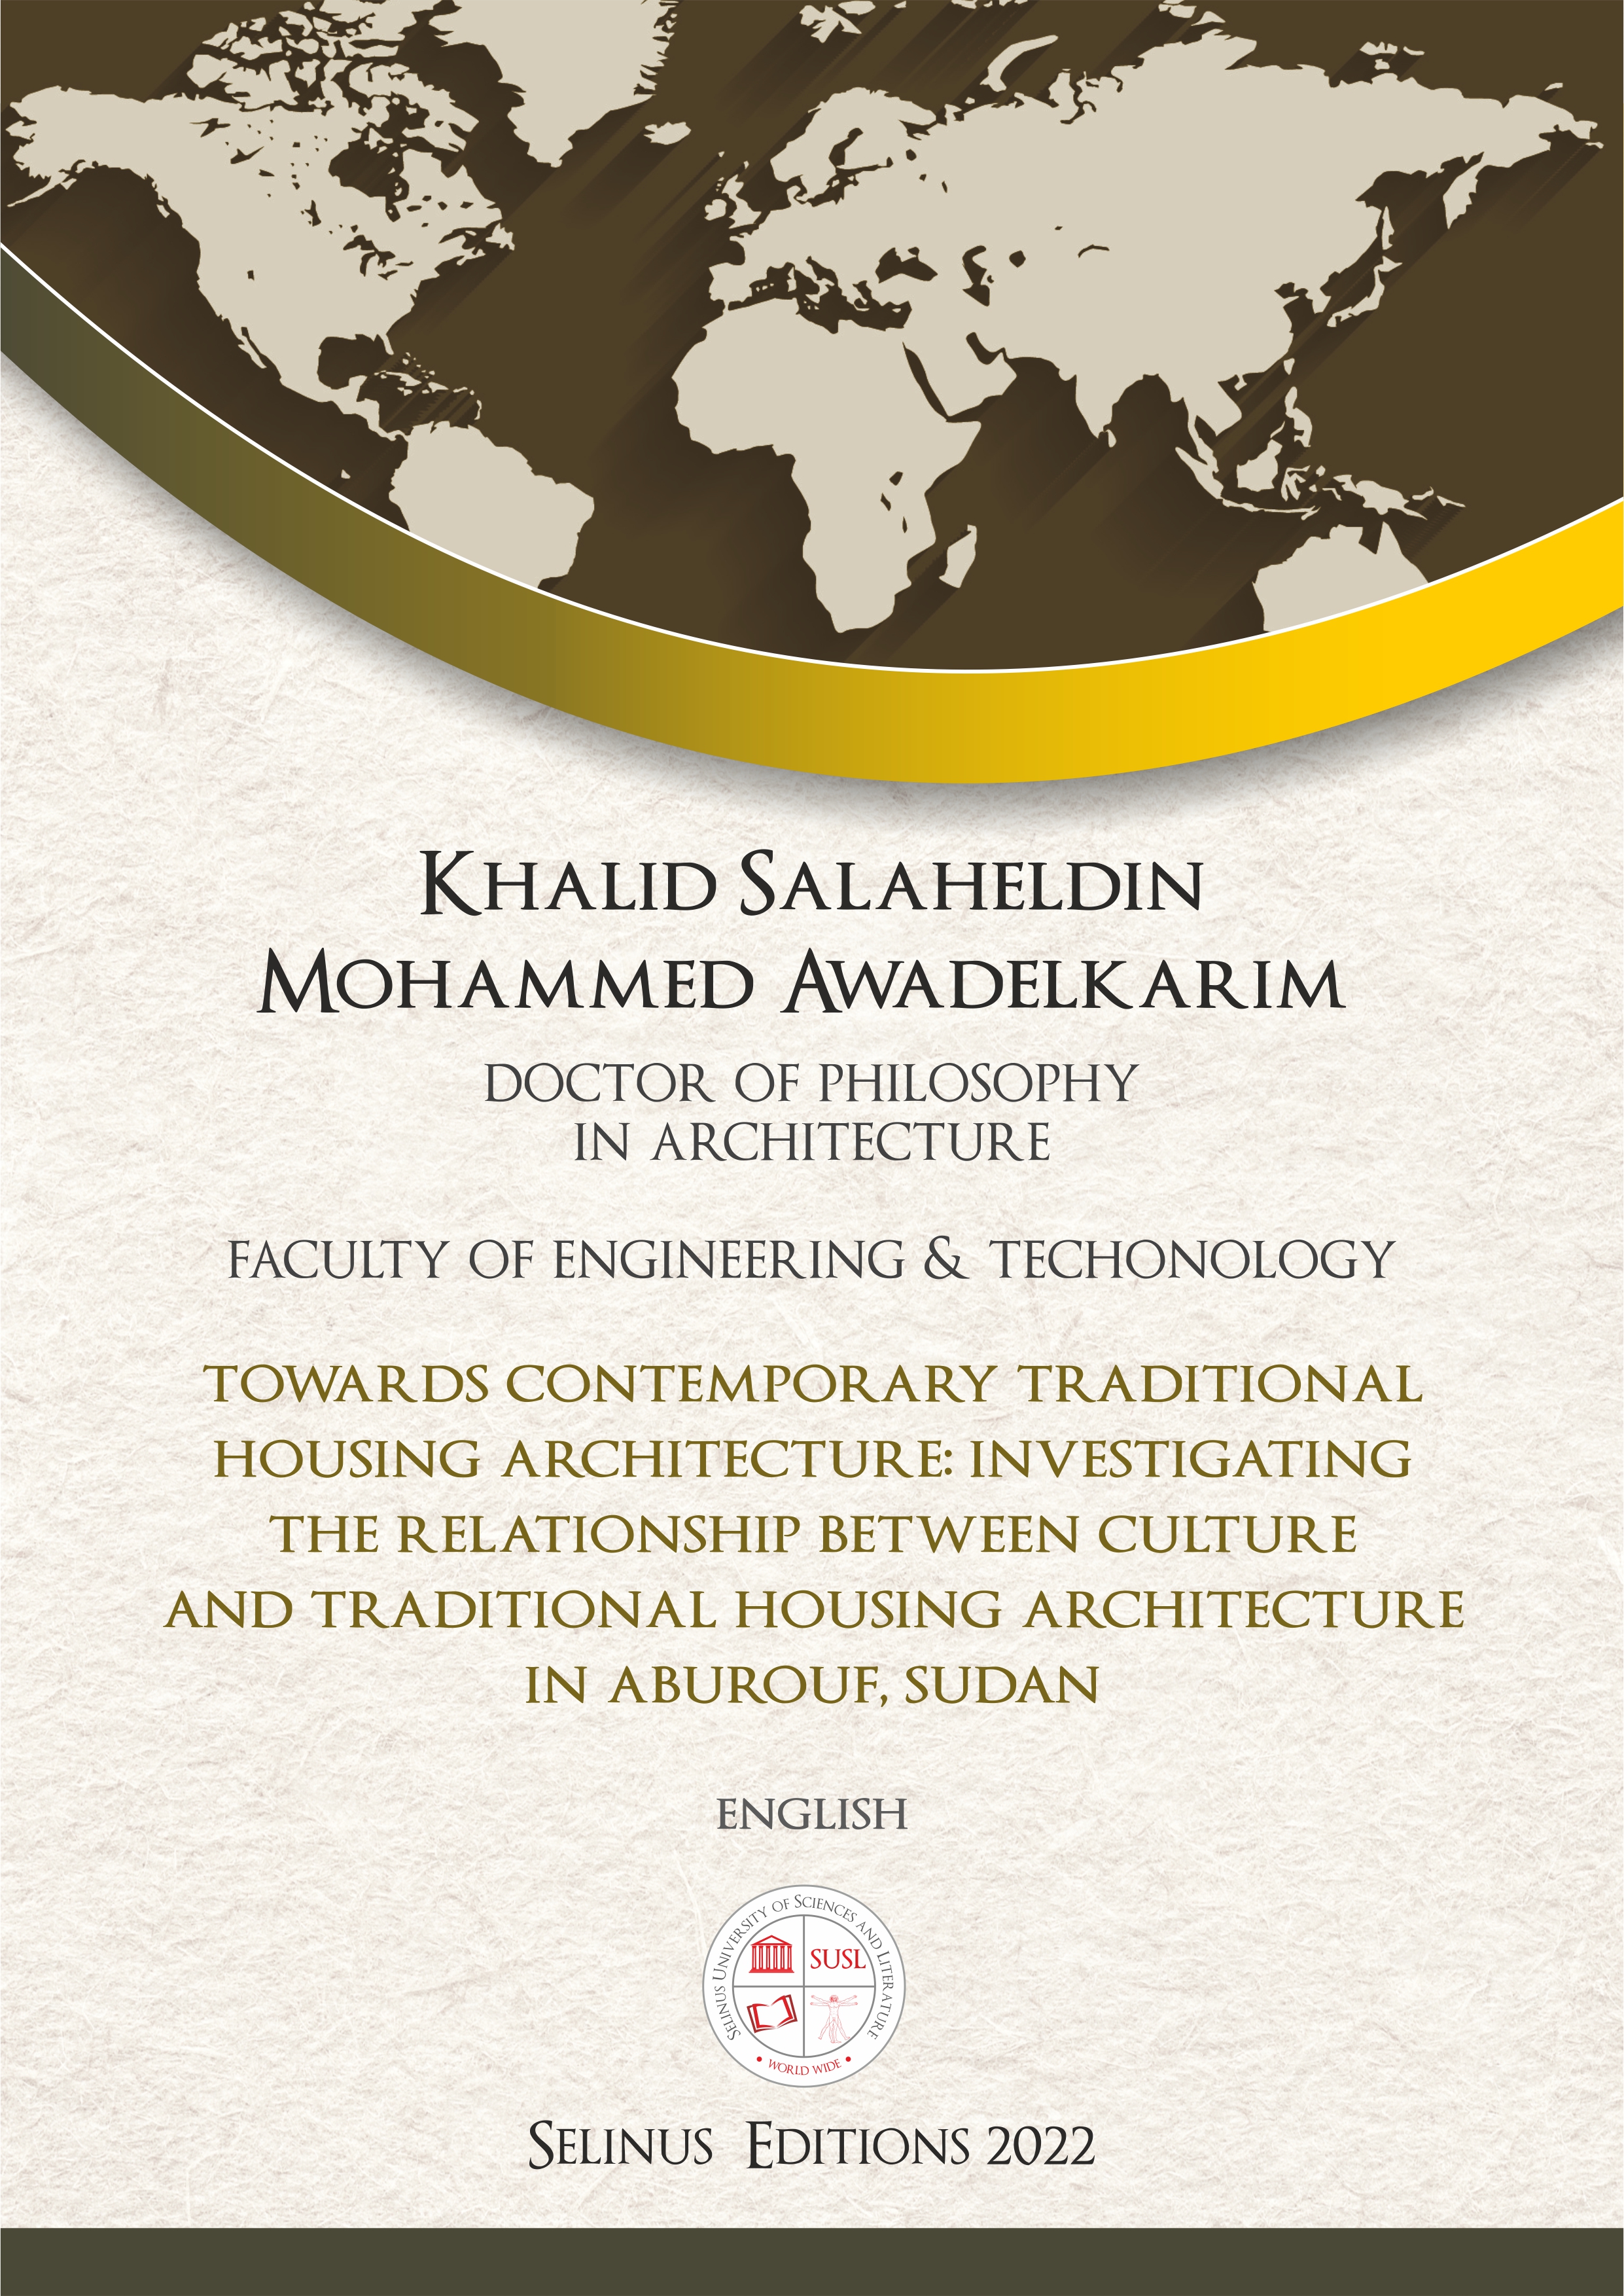 Thesis Khalid S. Mohammed Awadelkarim